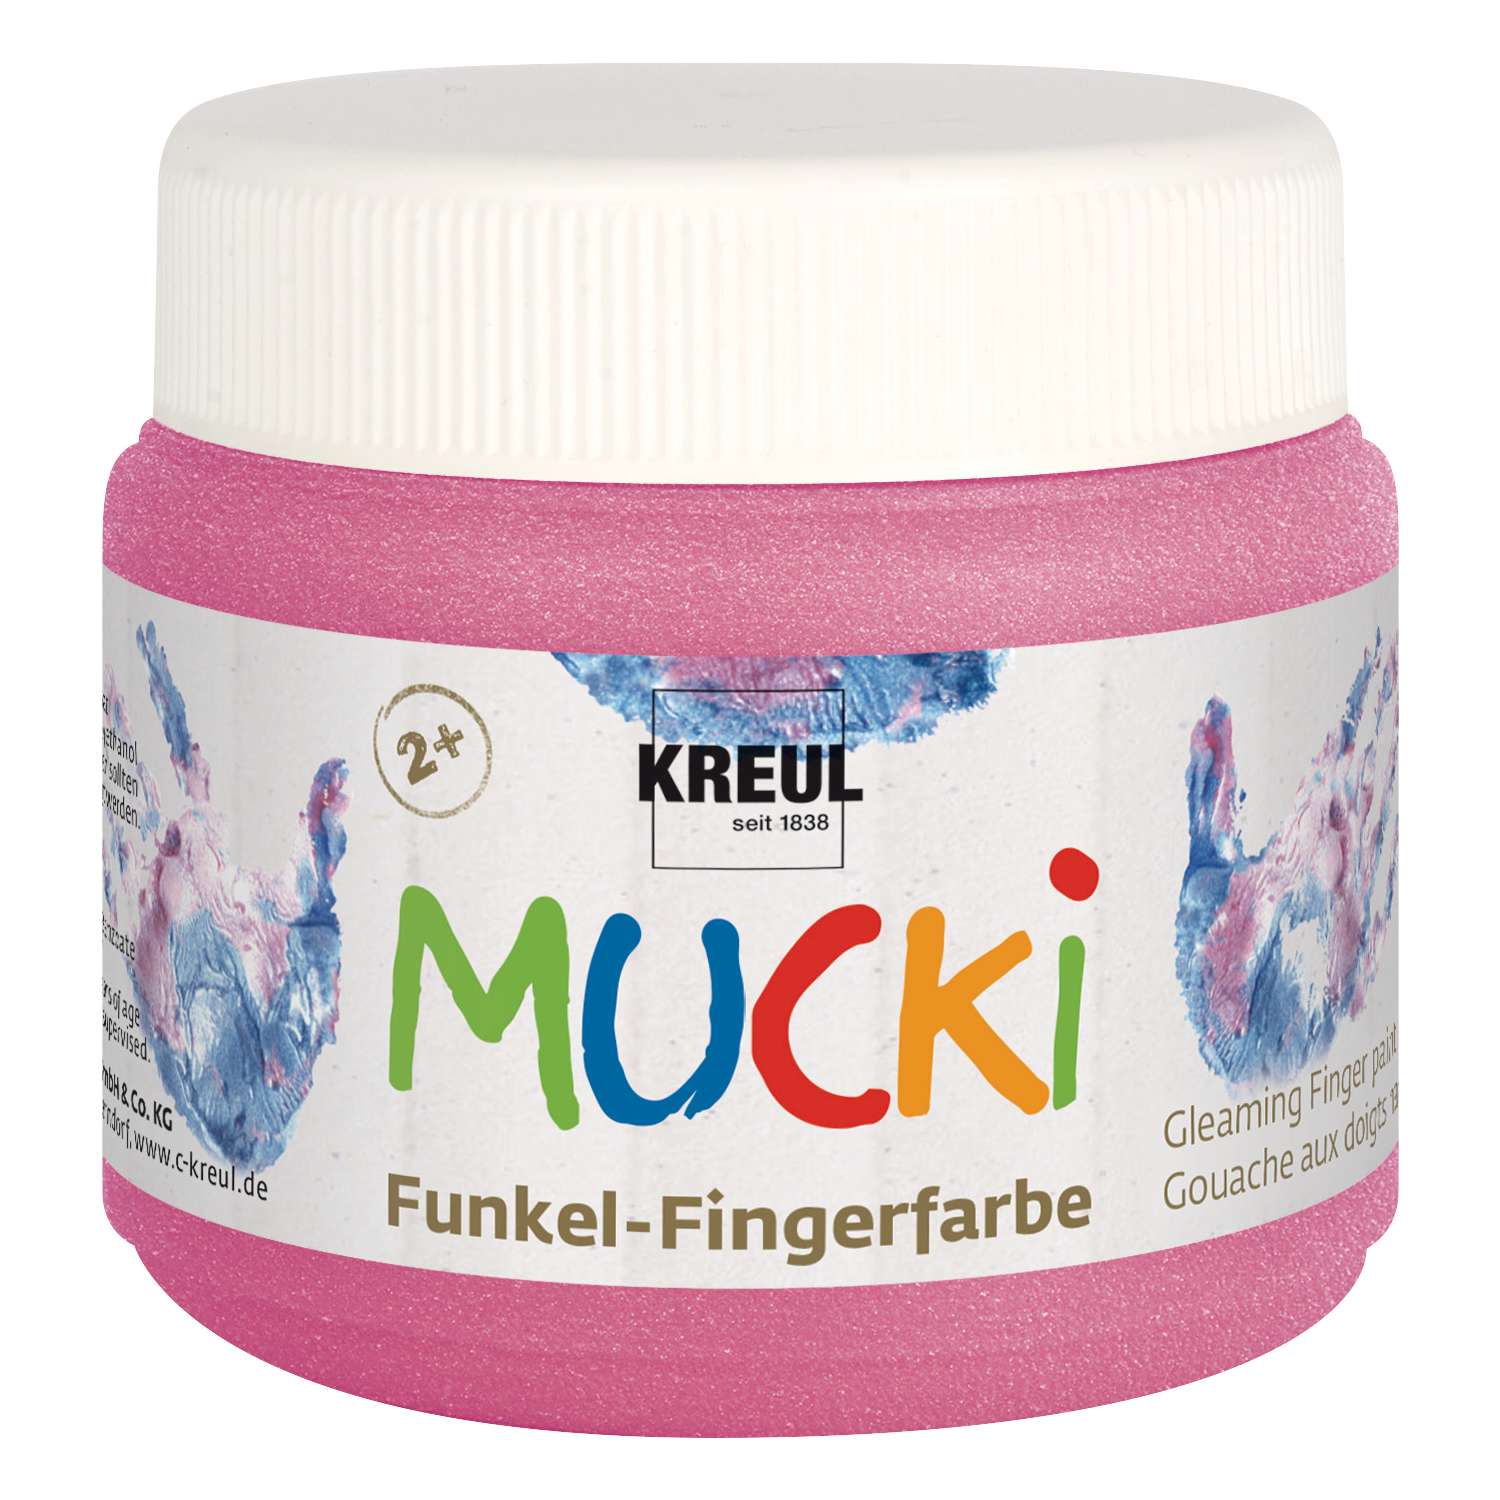 Kreul - Mucki, Colori a dita luccicanti, sfusi